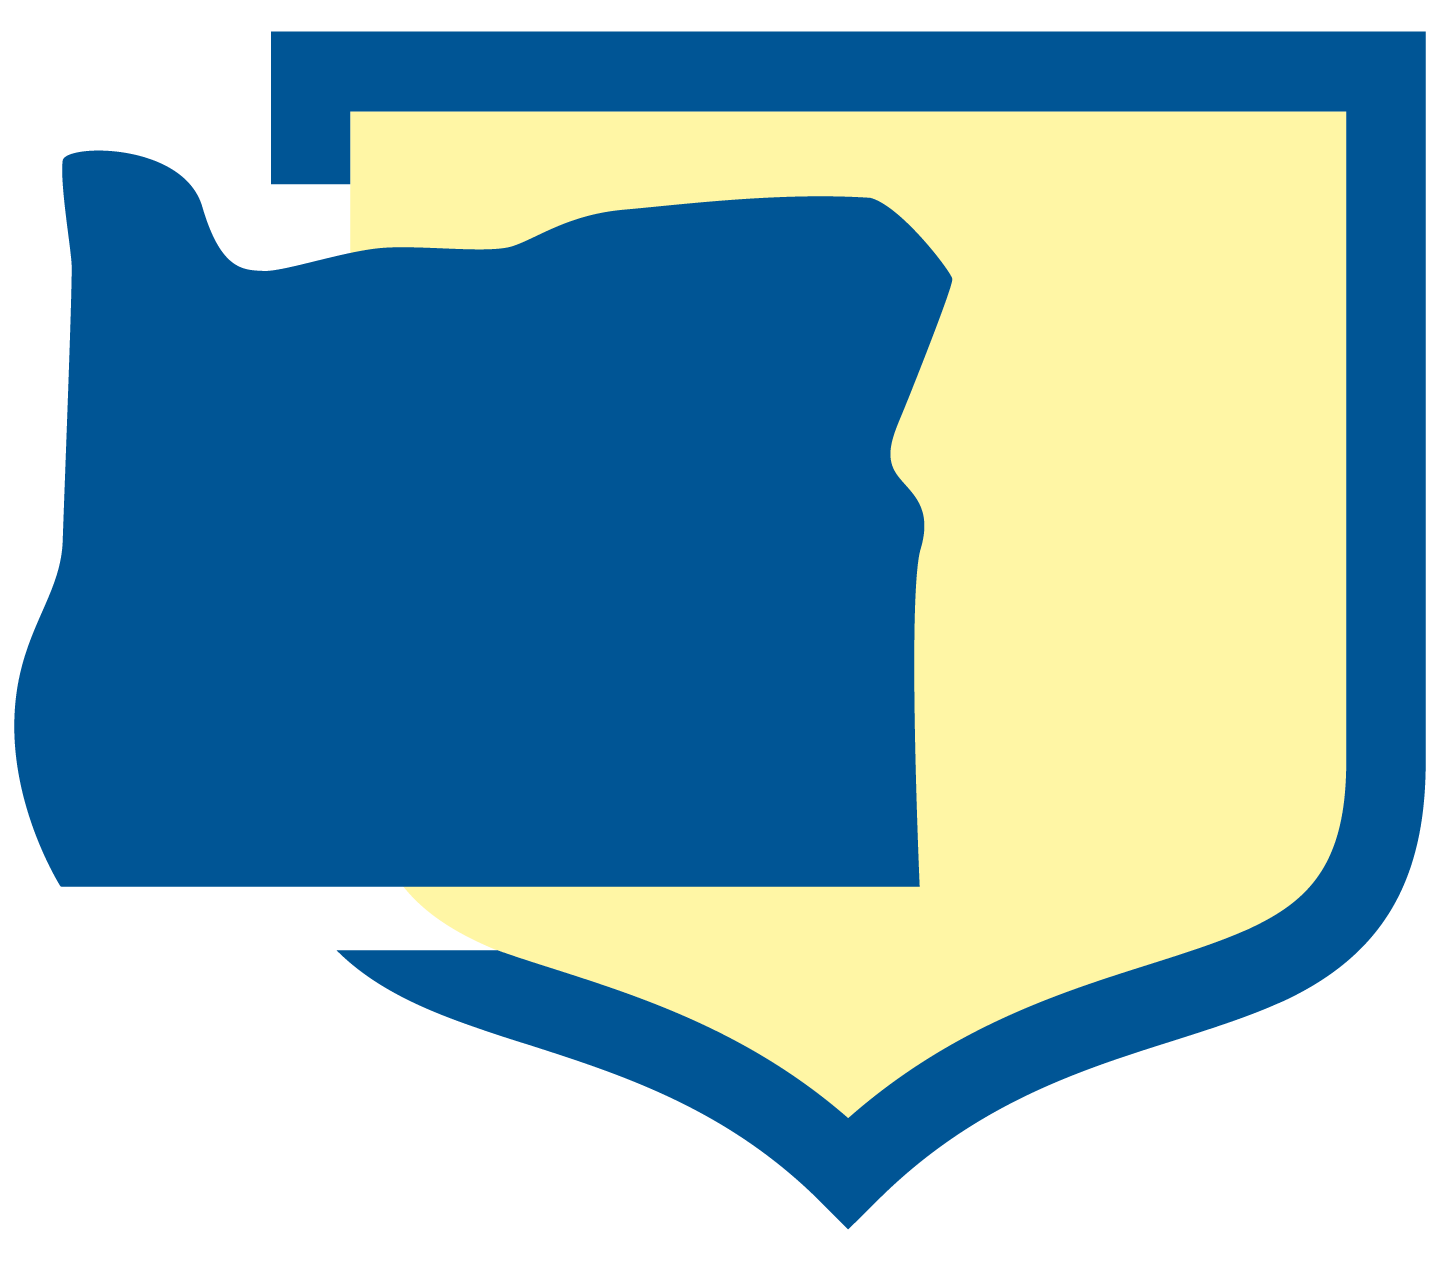 Oregon Health Insurance Marketplace logo